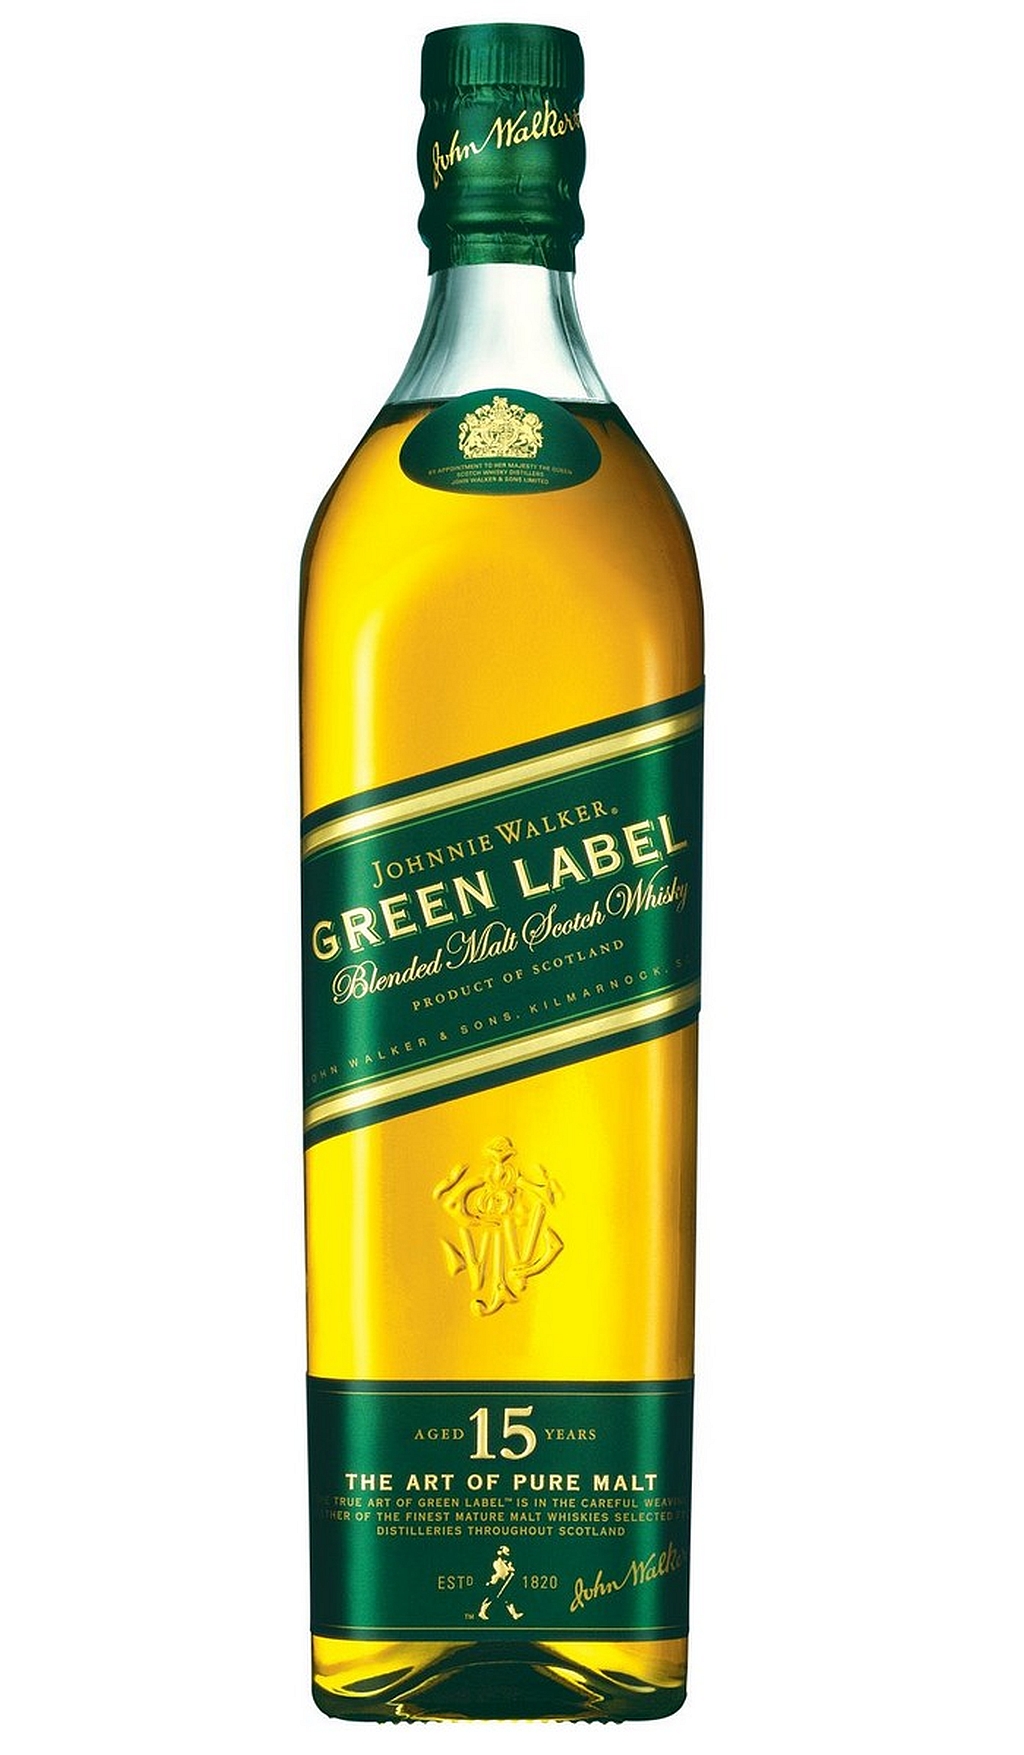 Johnnie Walker Green Label Bottle Picture Wallpaper Background